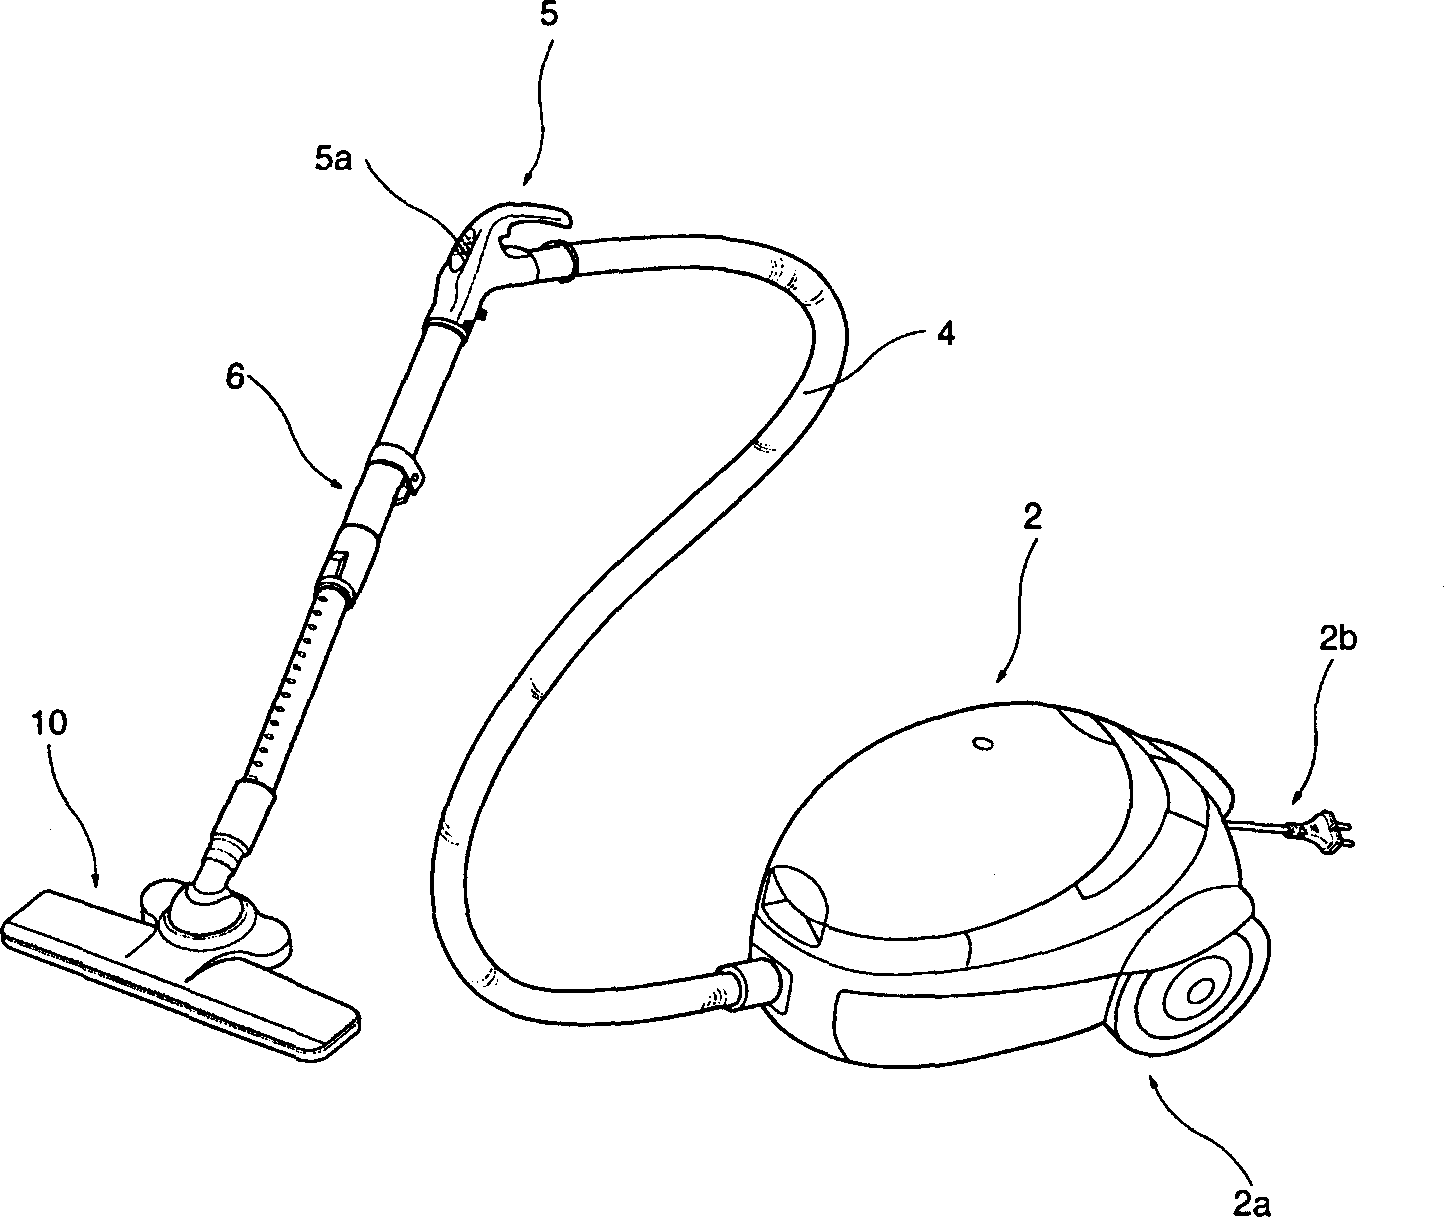 Suction nozzle of vacuum cleaner